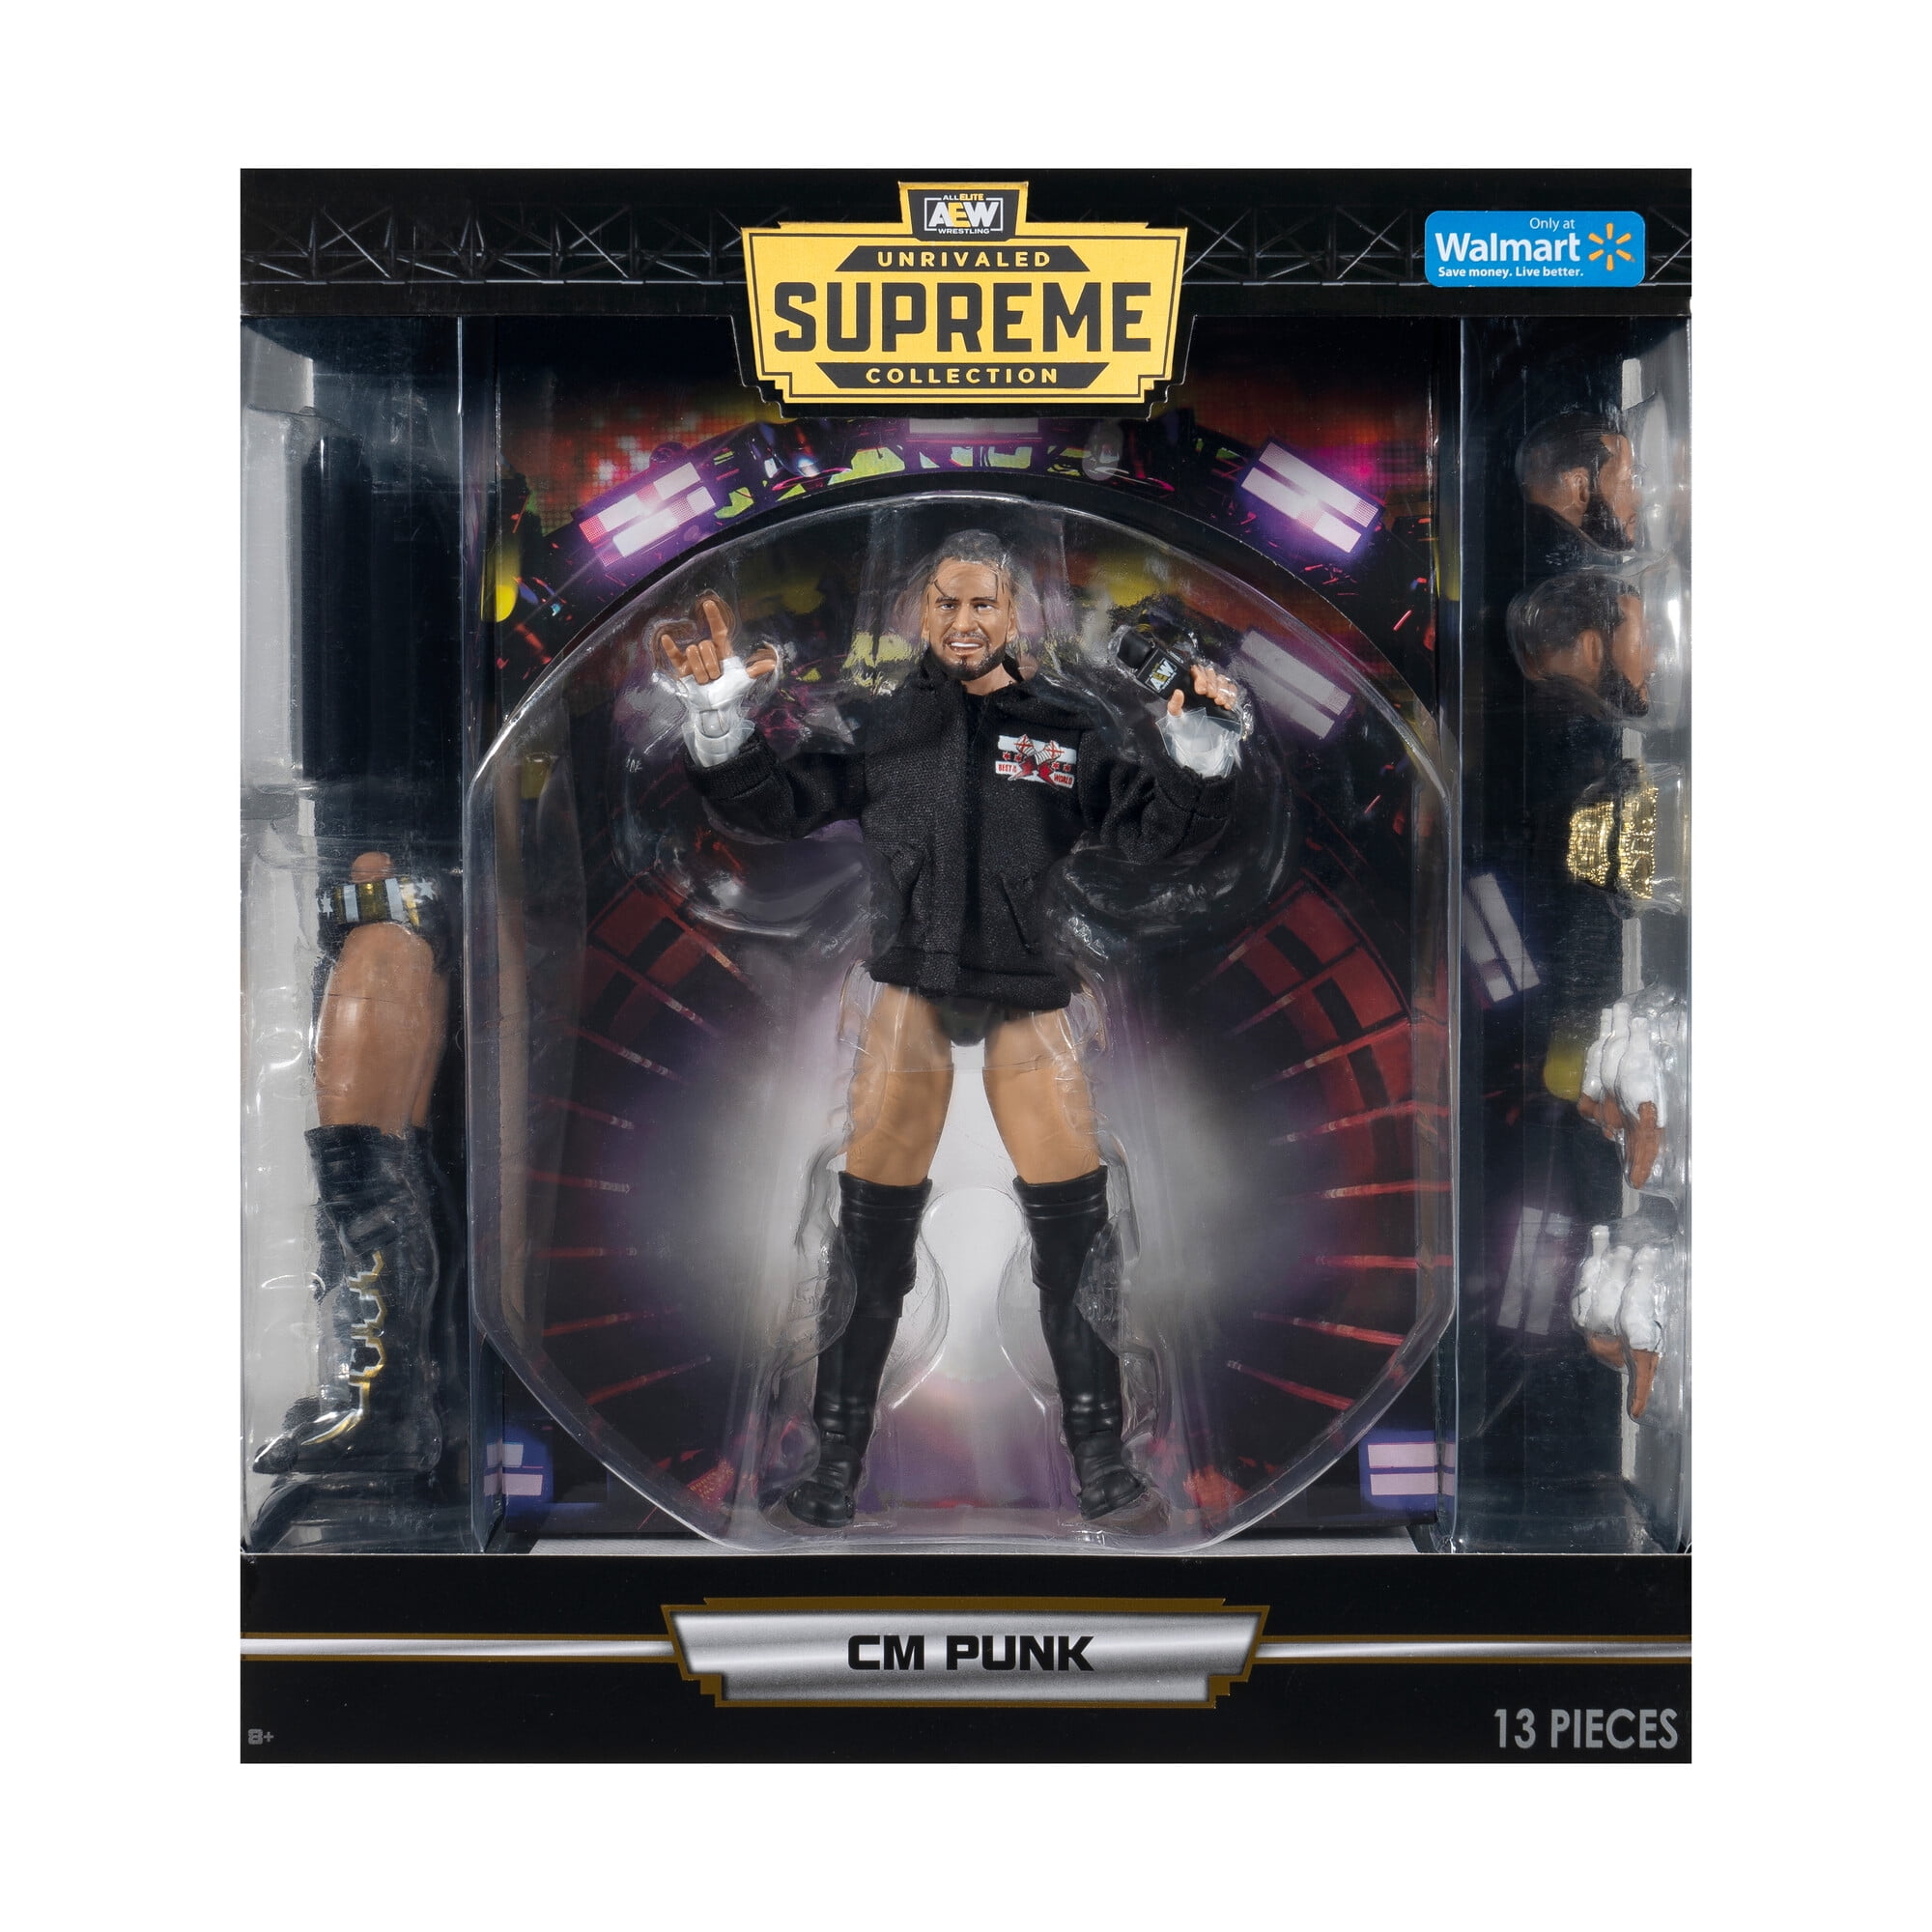 AEW Unrivaled Supreme CM Punk - Walmart Exclusive 6 inch Figure